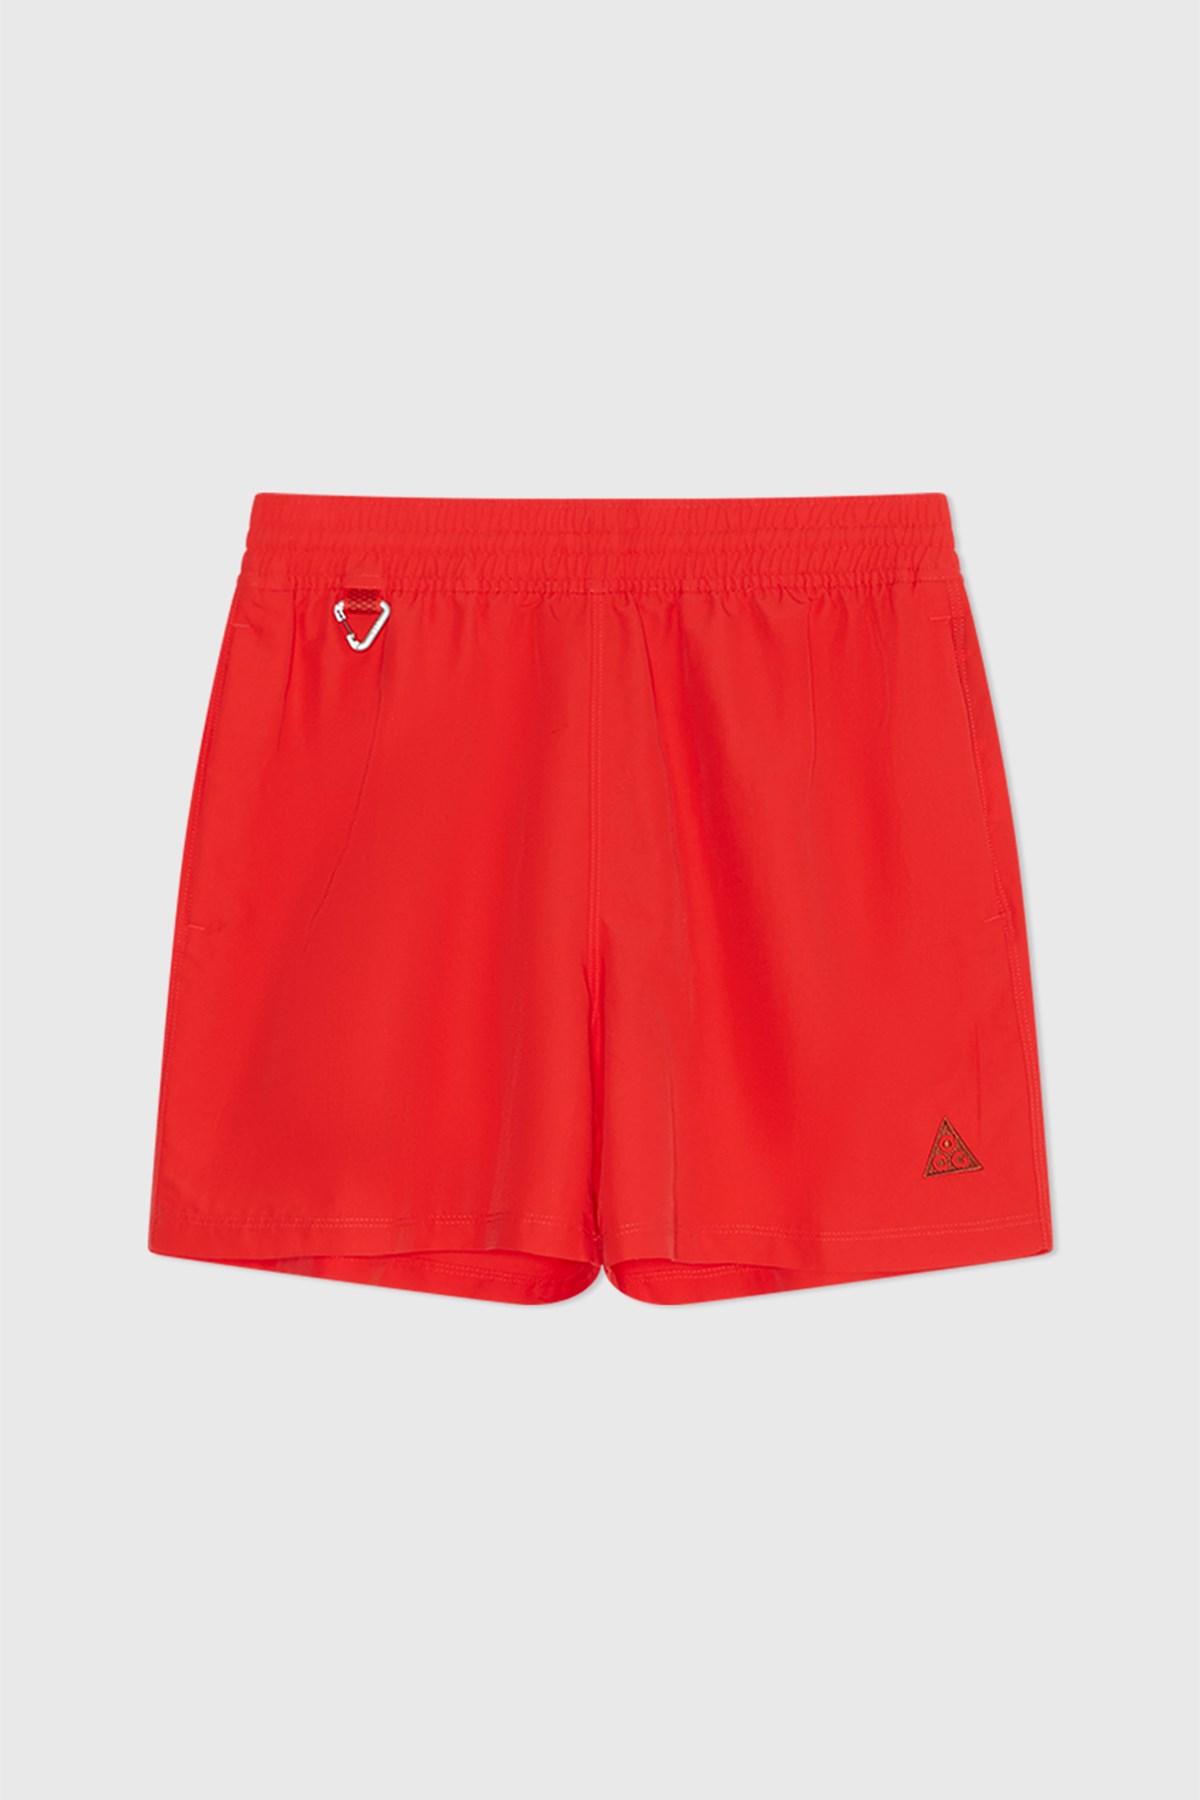 Nike Nike ACG Shorts Red